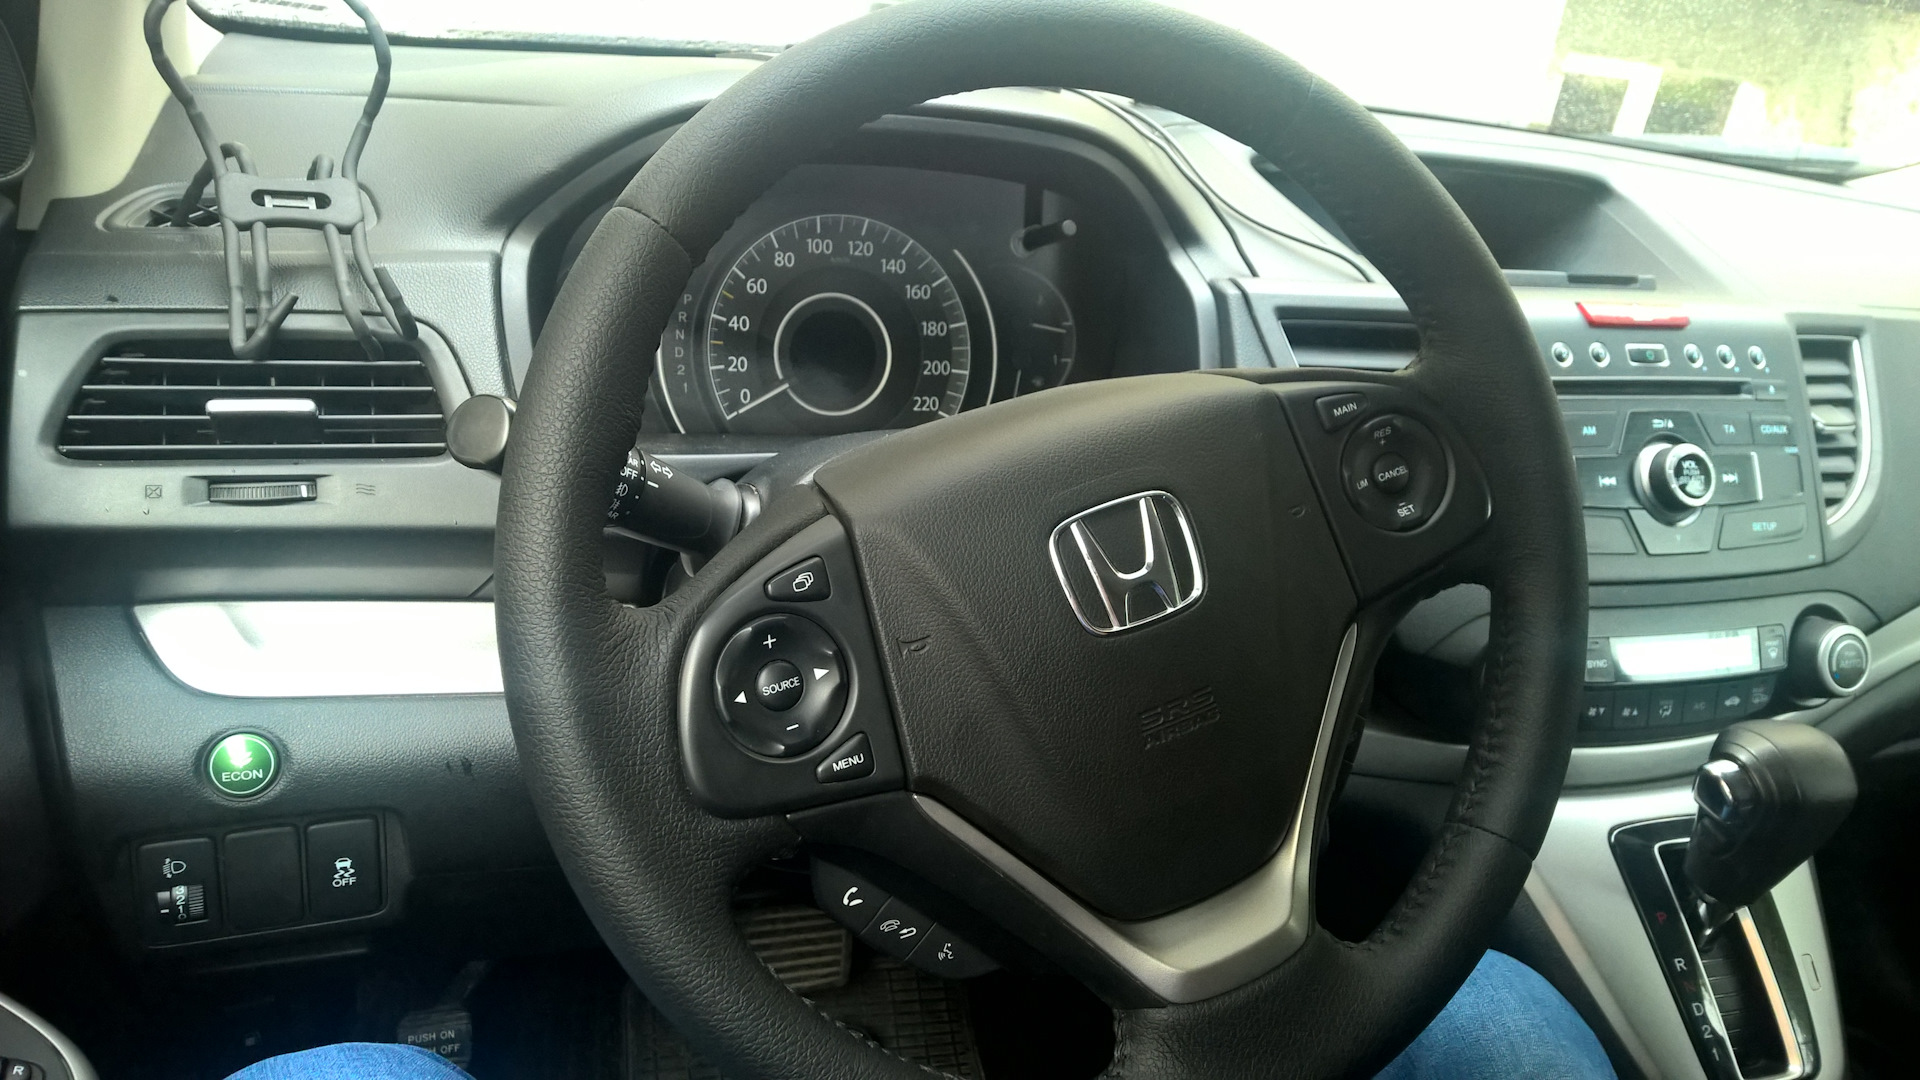 Honda crv руль. Руль Хонда СРВ 4. Хонда СРВ 2013 руль. Руль Хонда СРВ 2014. Honda CRV 2013 руль.